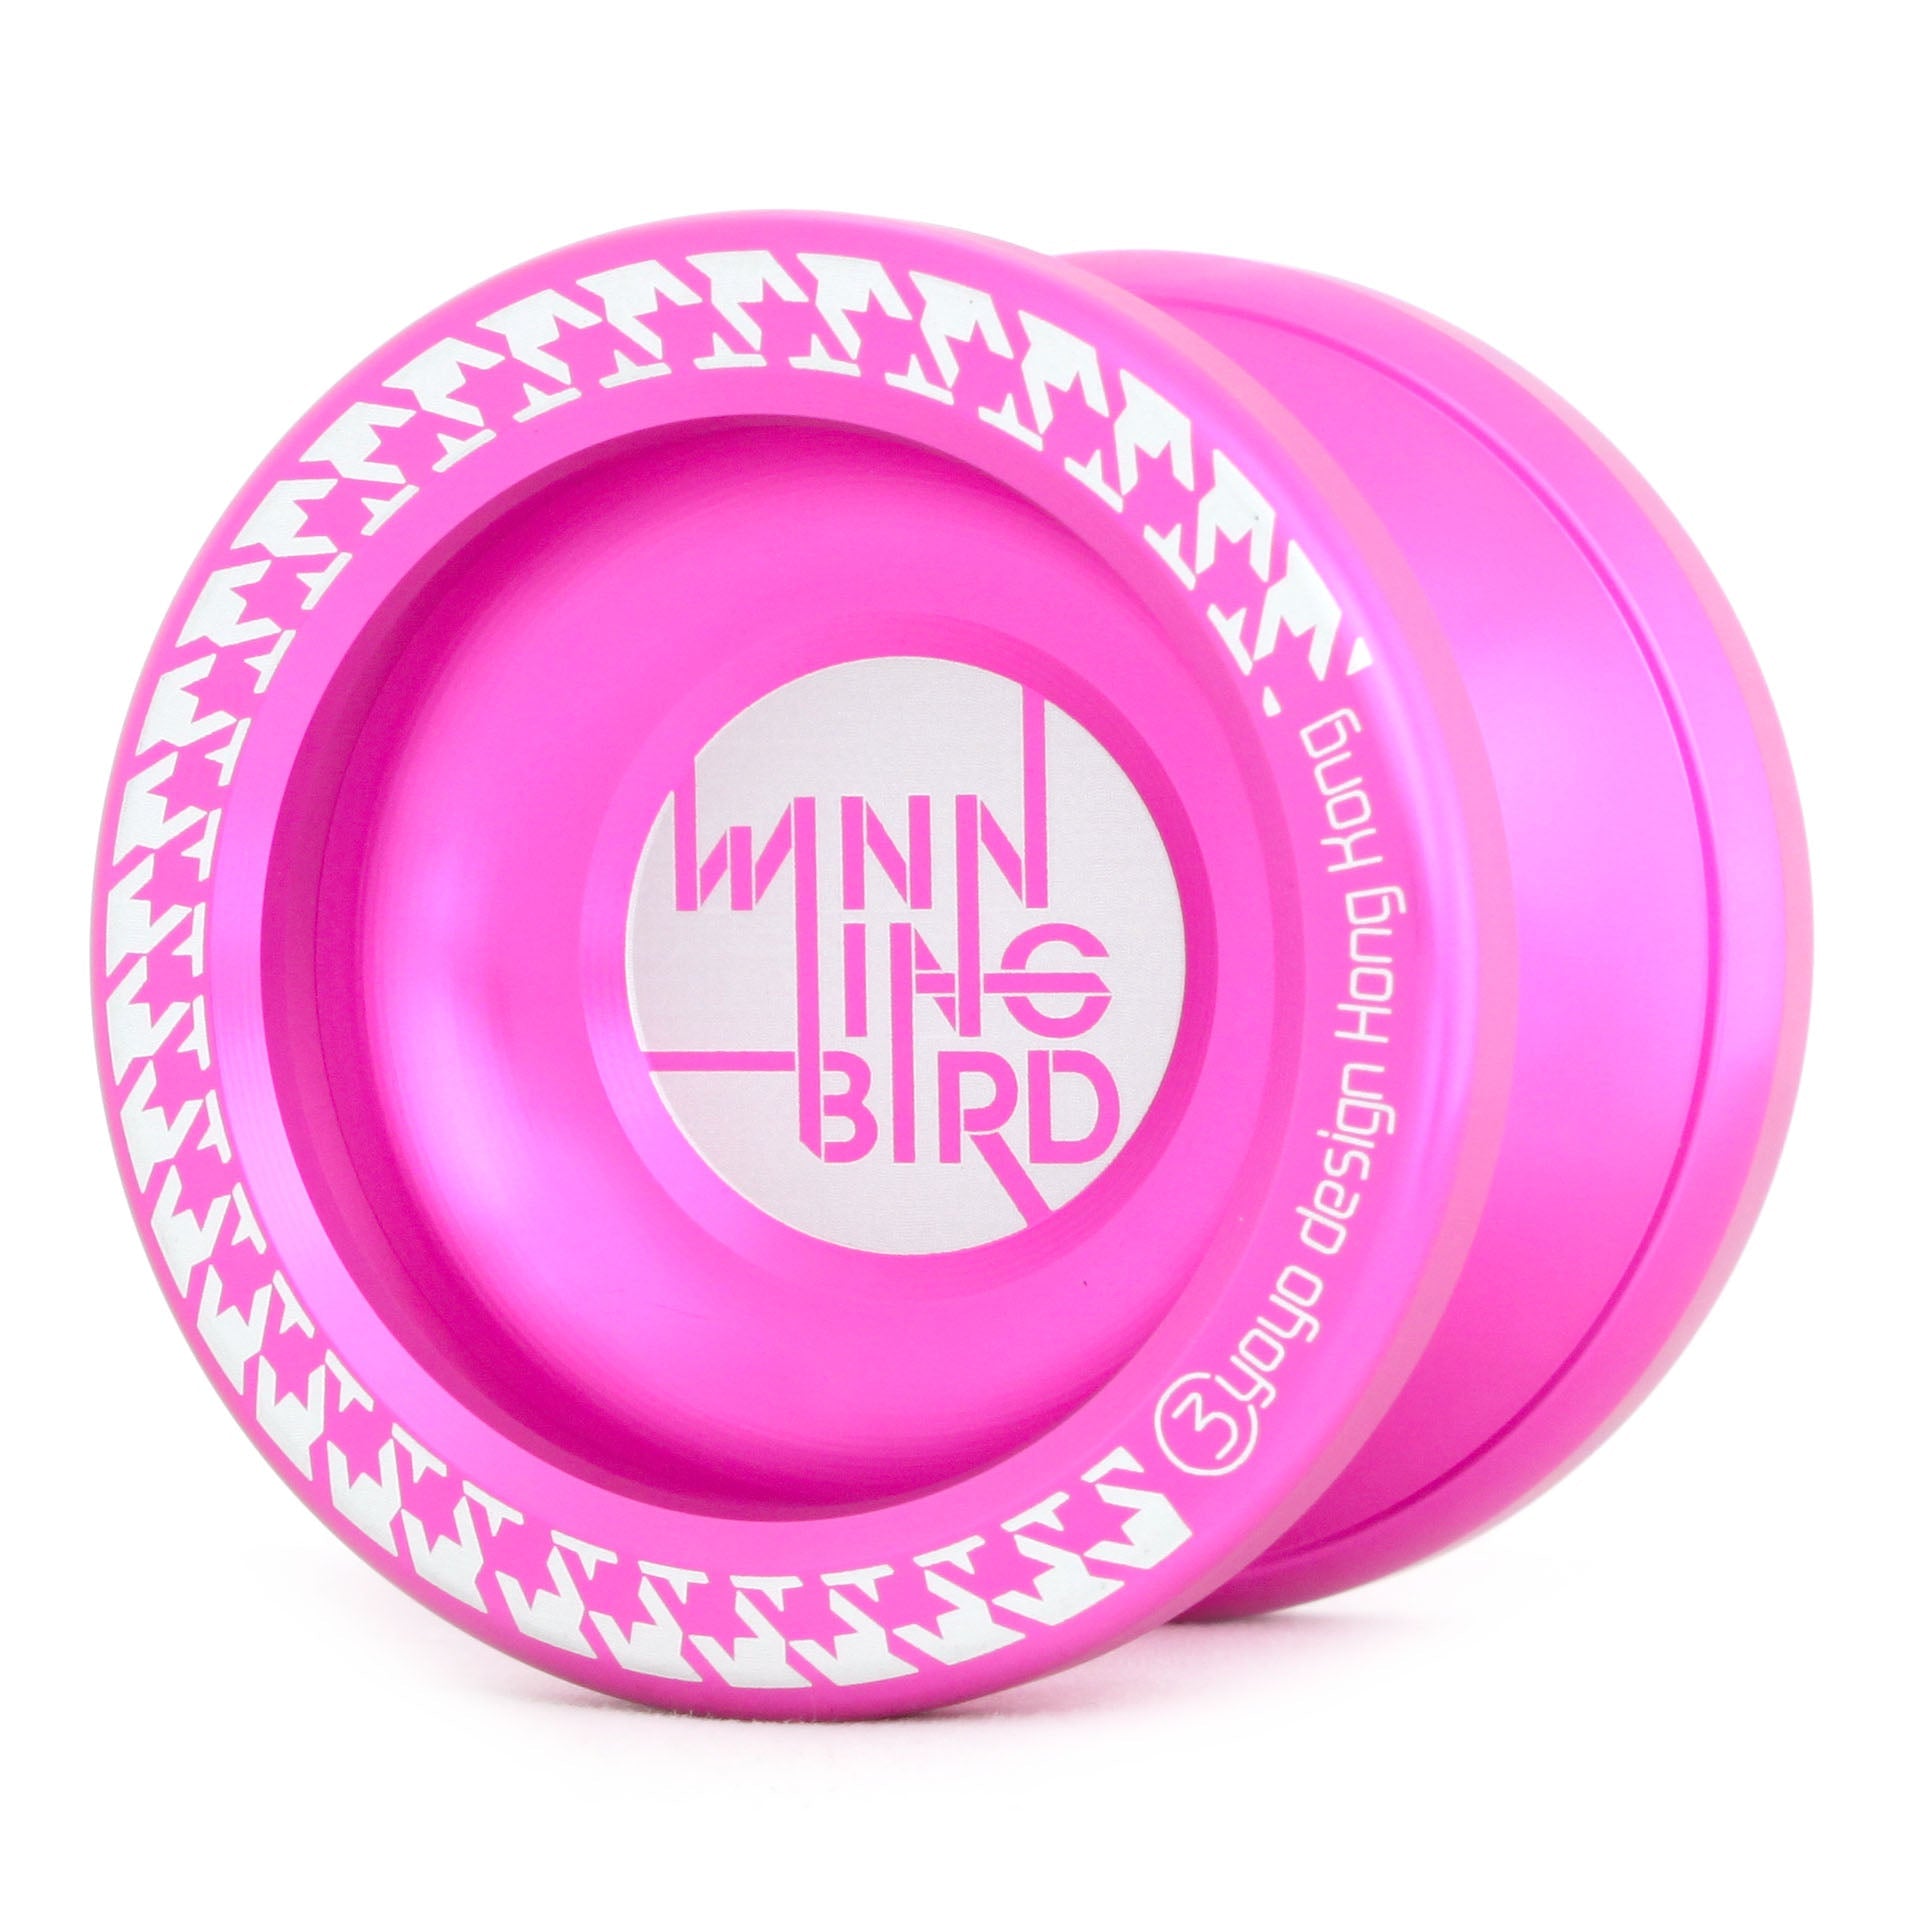 Winning Bird - C3yoyodesign